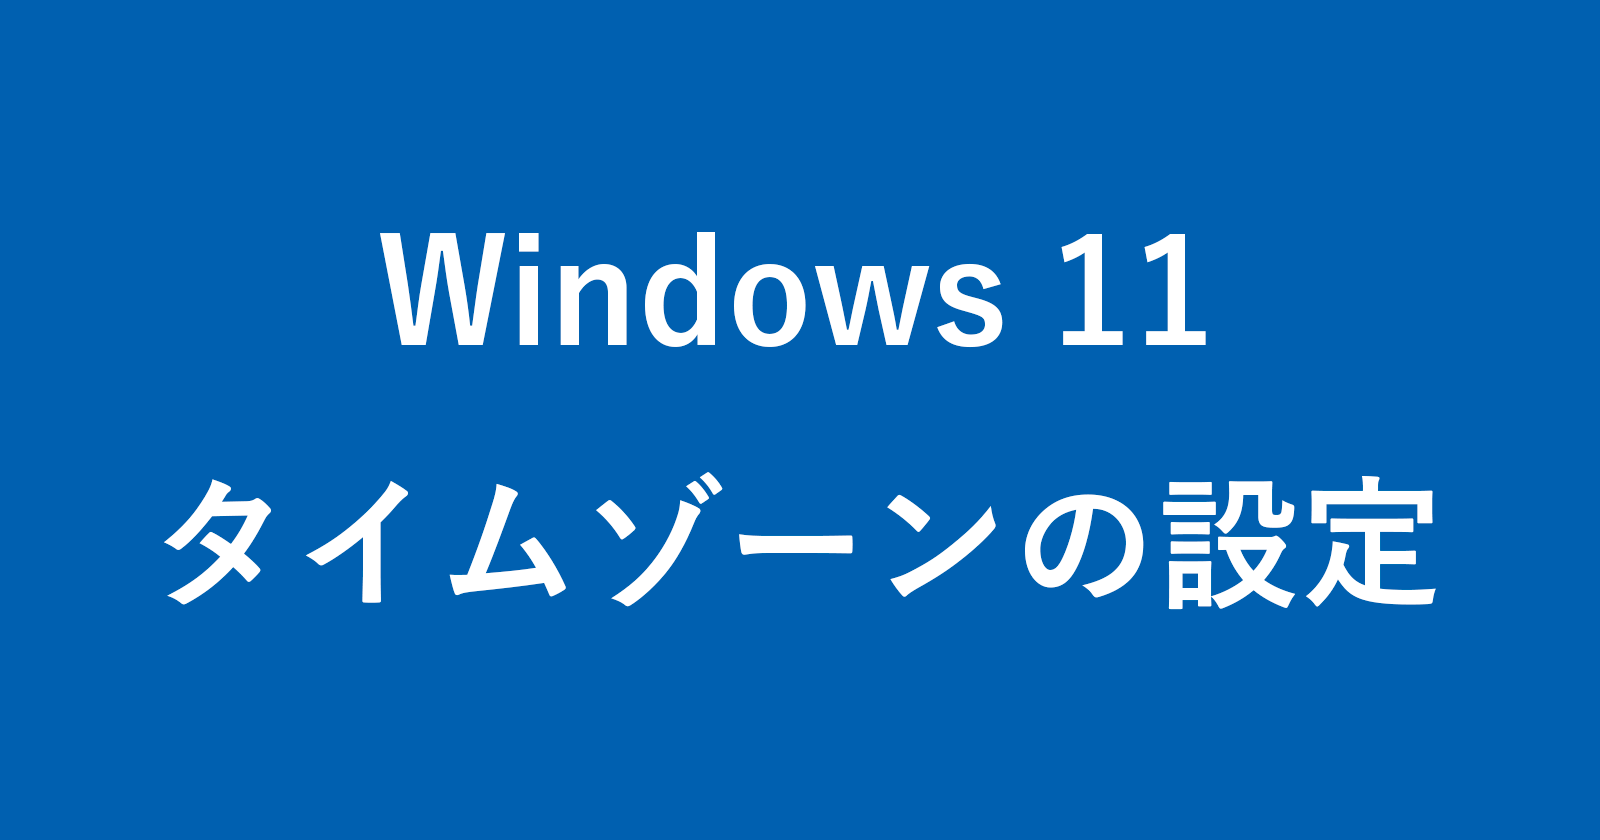 windows 11 time zone